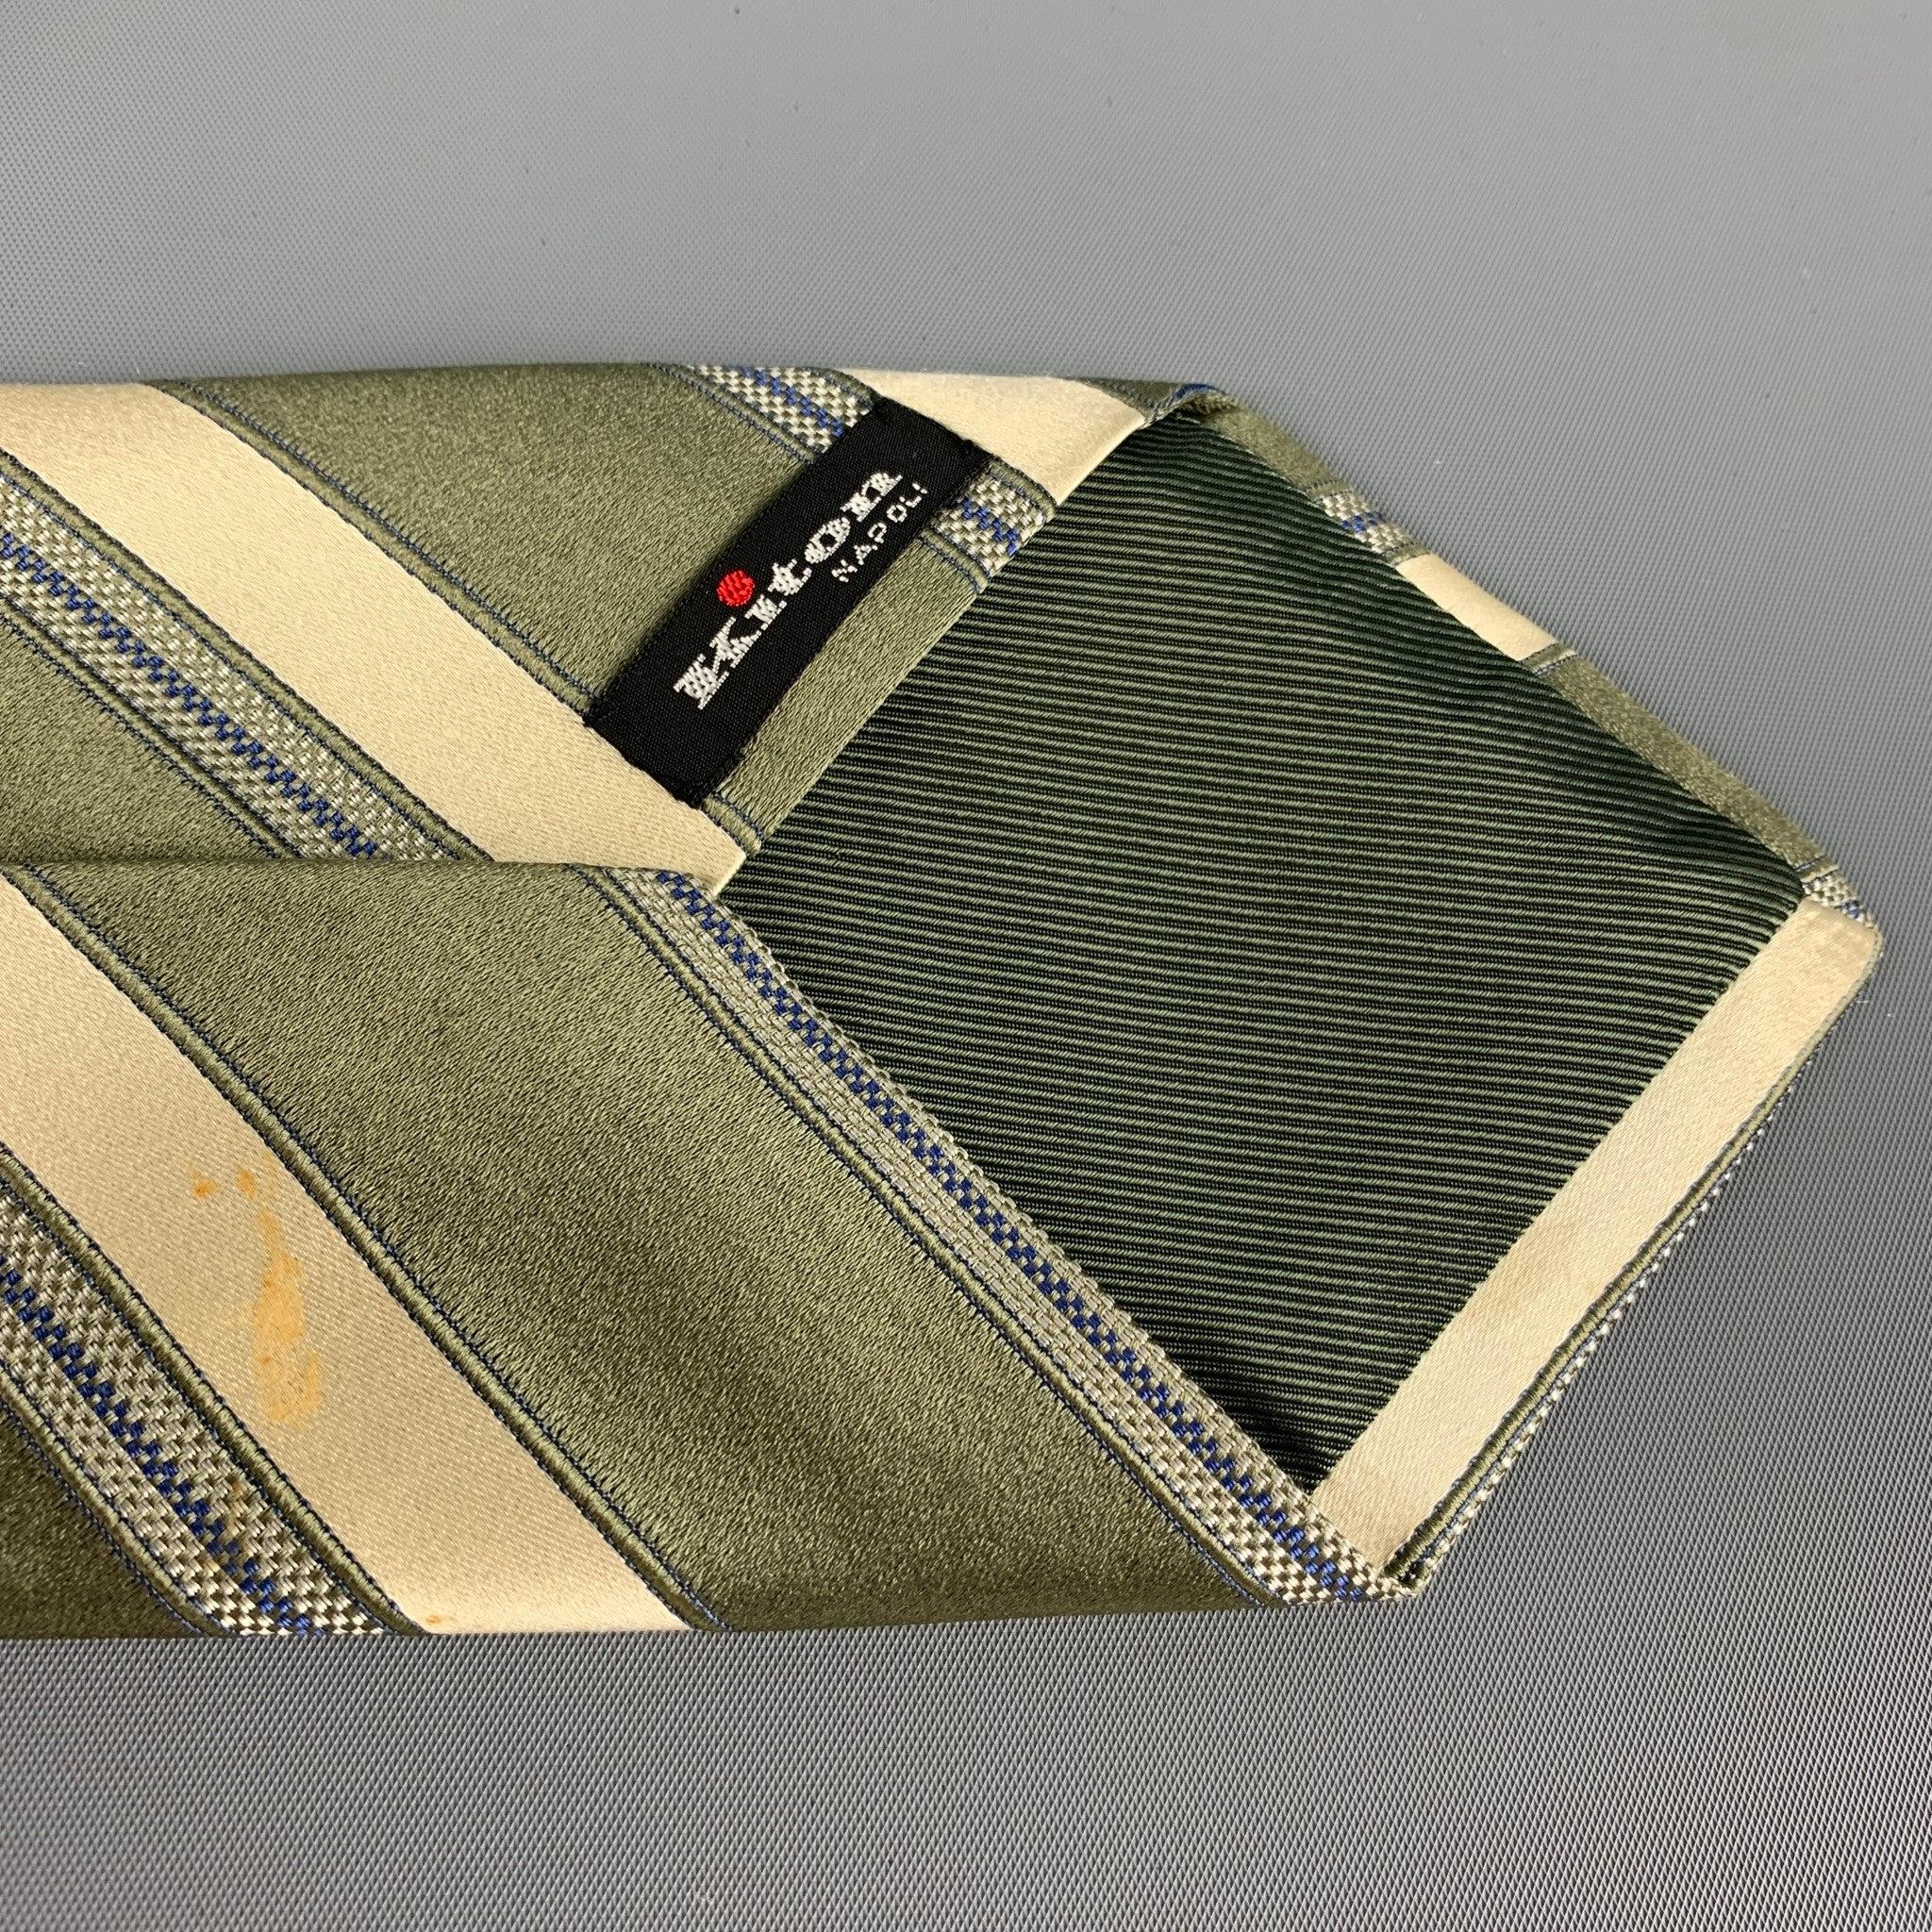 KITON Moss Yellow Diagonal Stripe Silk Tie In Good Condition For Sale In San Francisco, CA